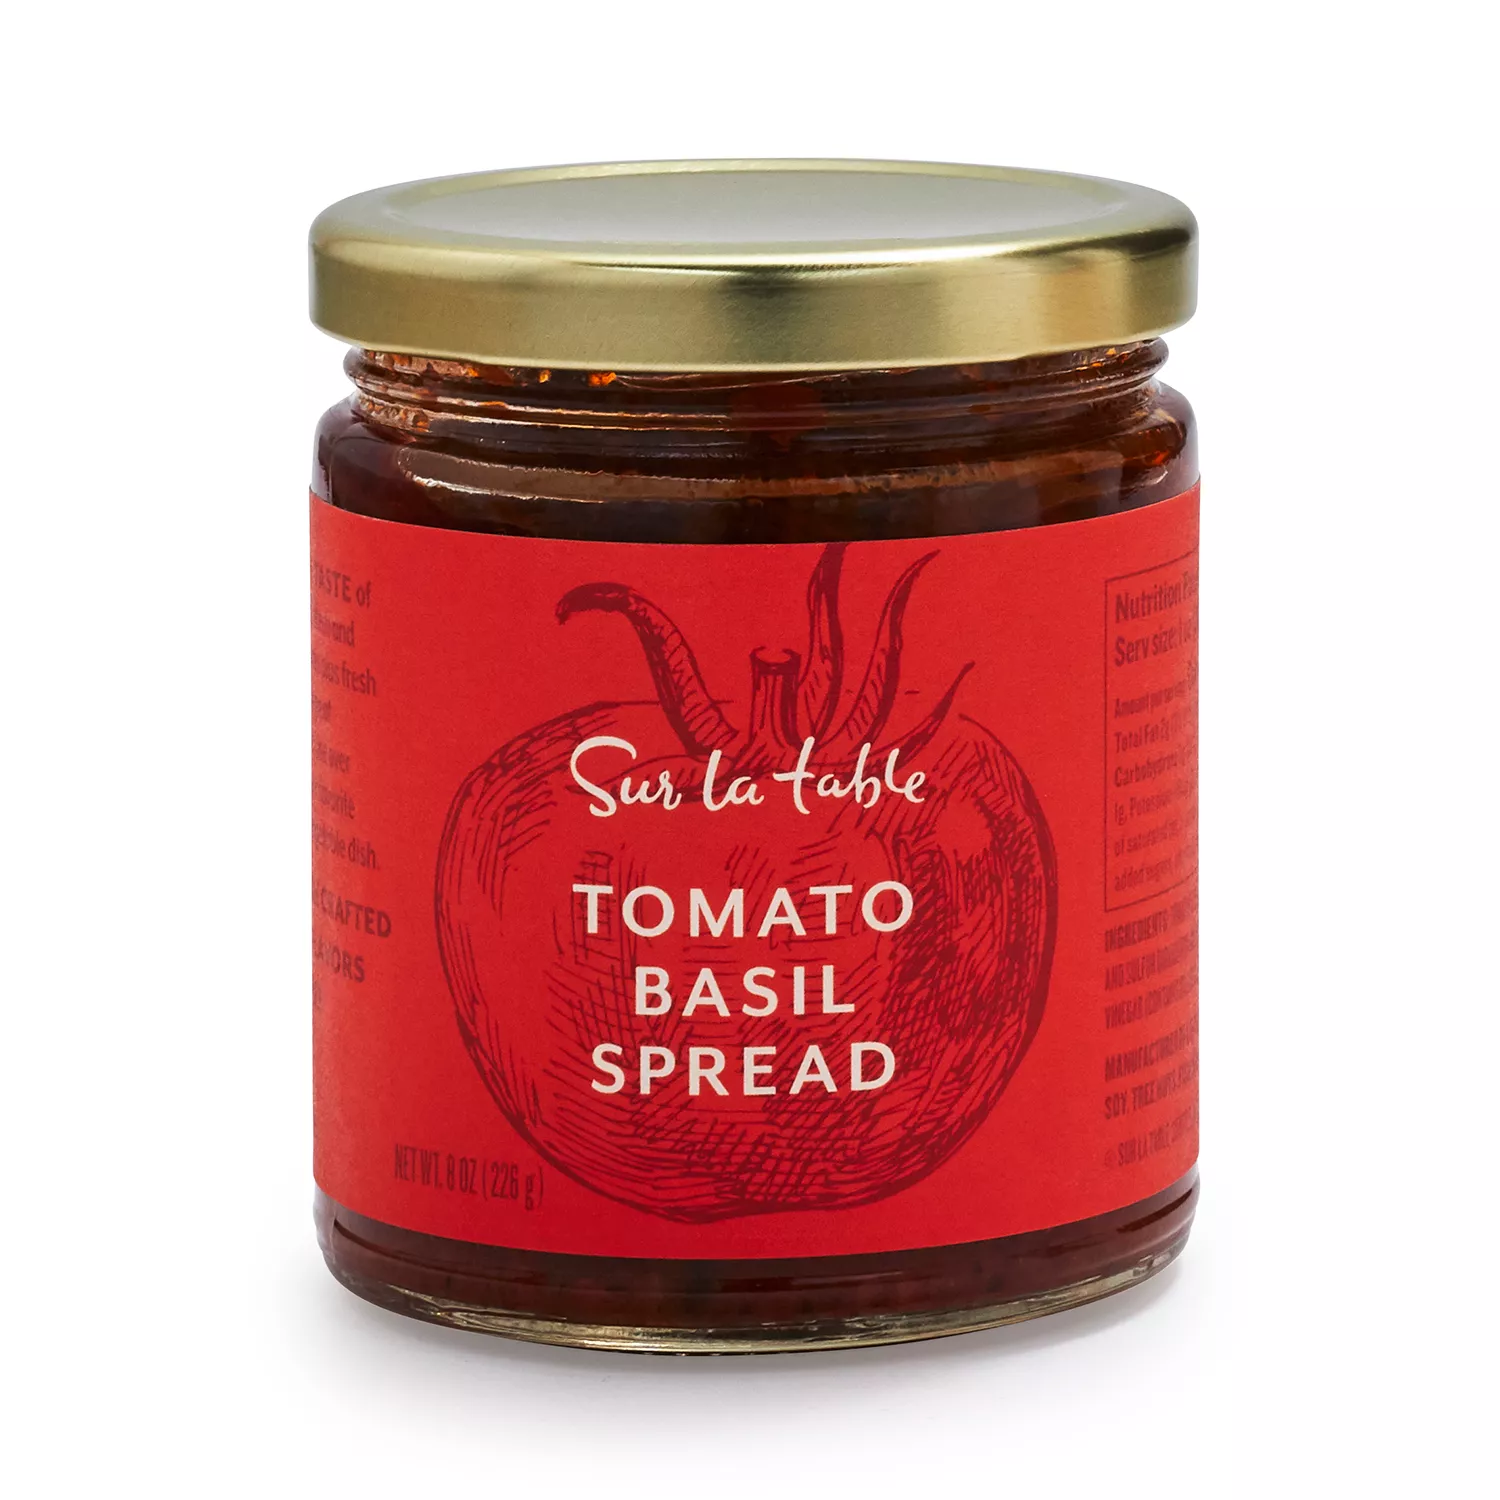 Sur La Table Tomato Basil Spread